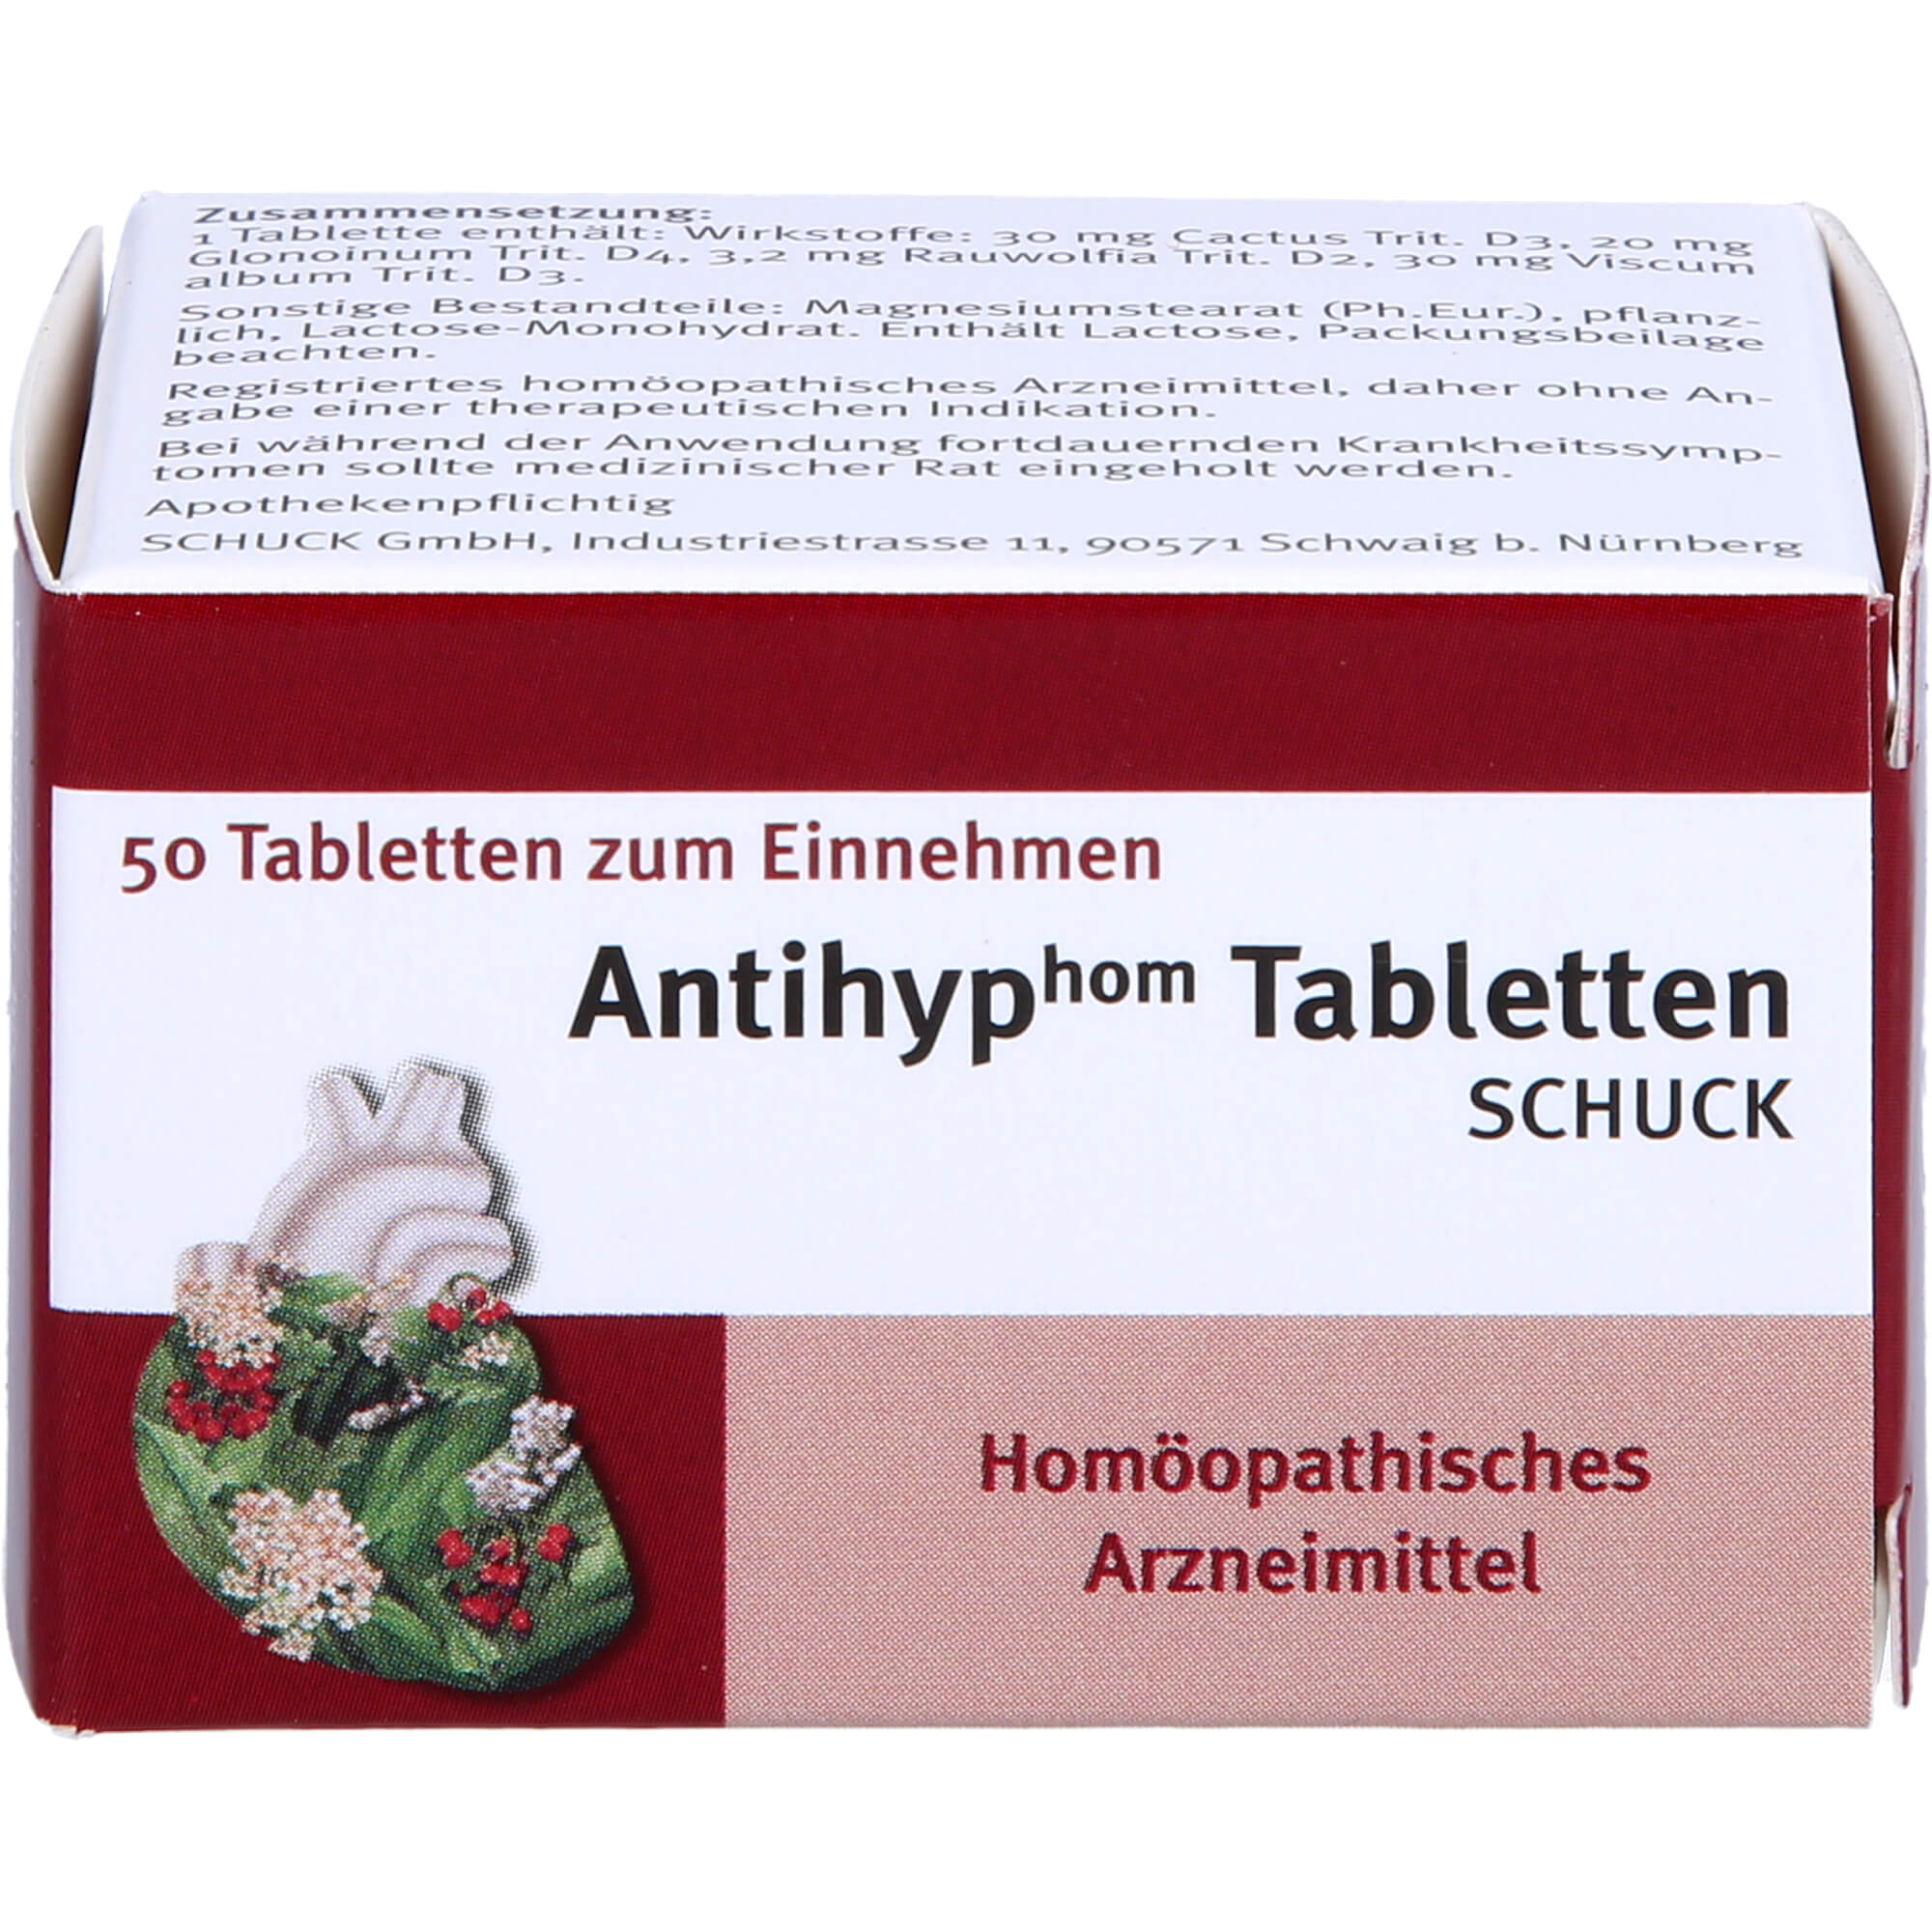 ANTIHYP Tabletten Schuck